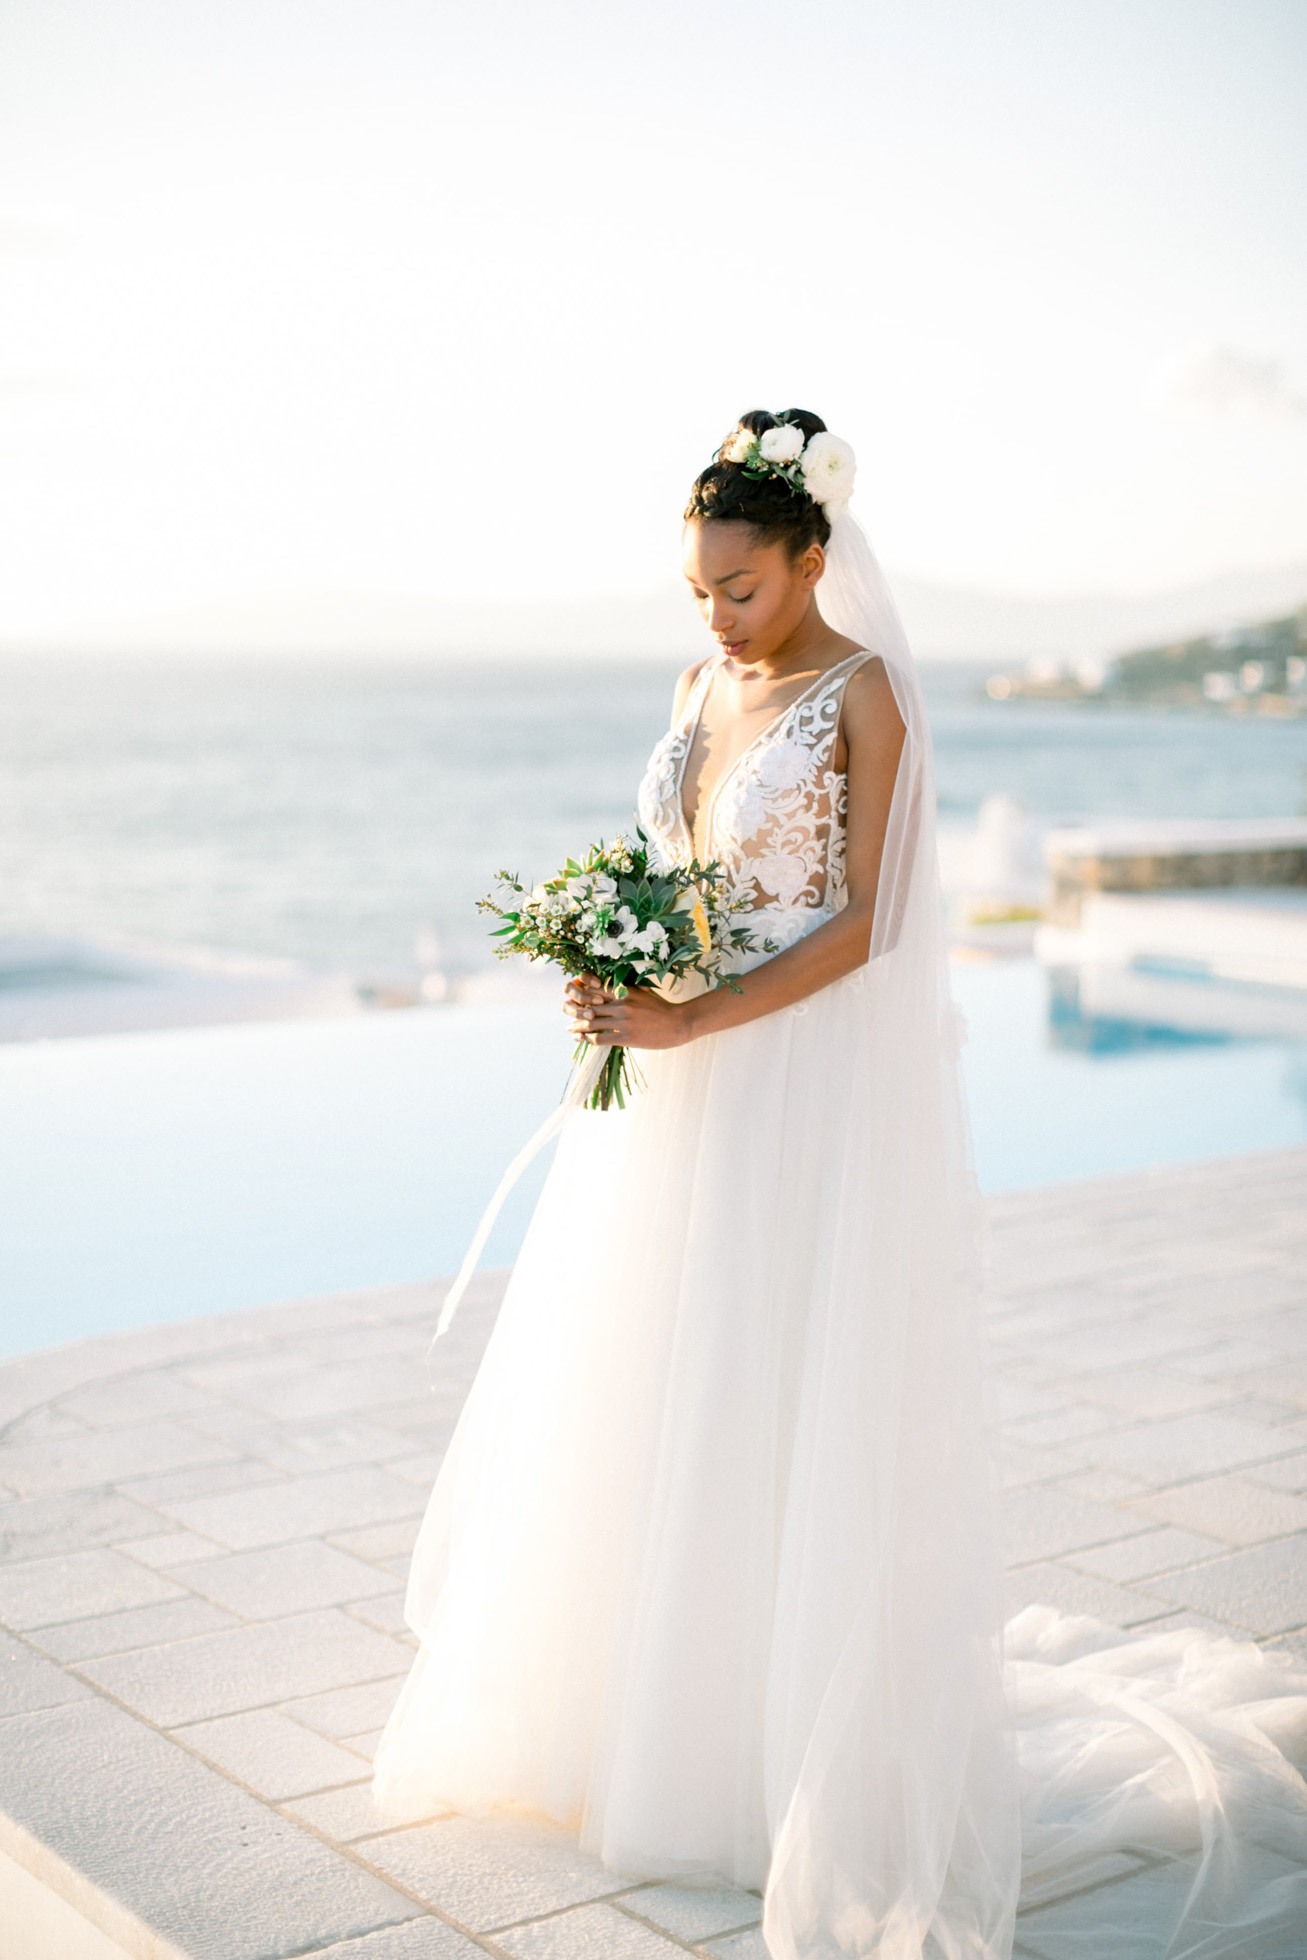 Stunning black bride at a villa wedding inspiration session by DeplanV in Loyal Villas Luxury, Mykonos, Greece.